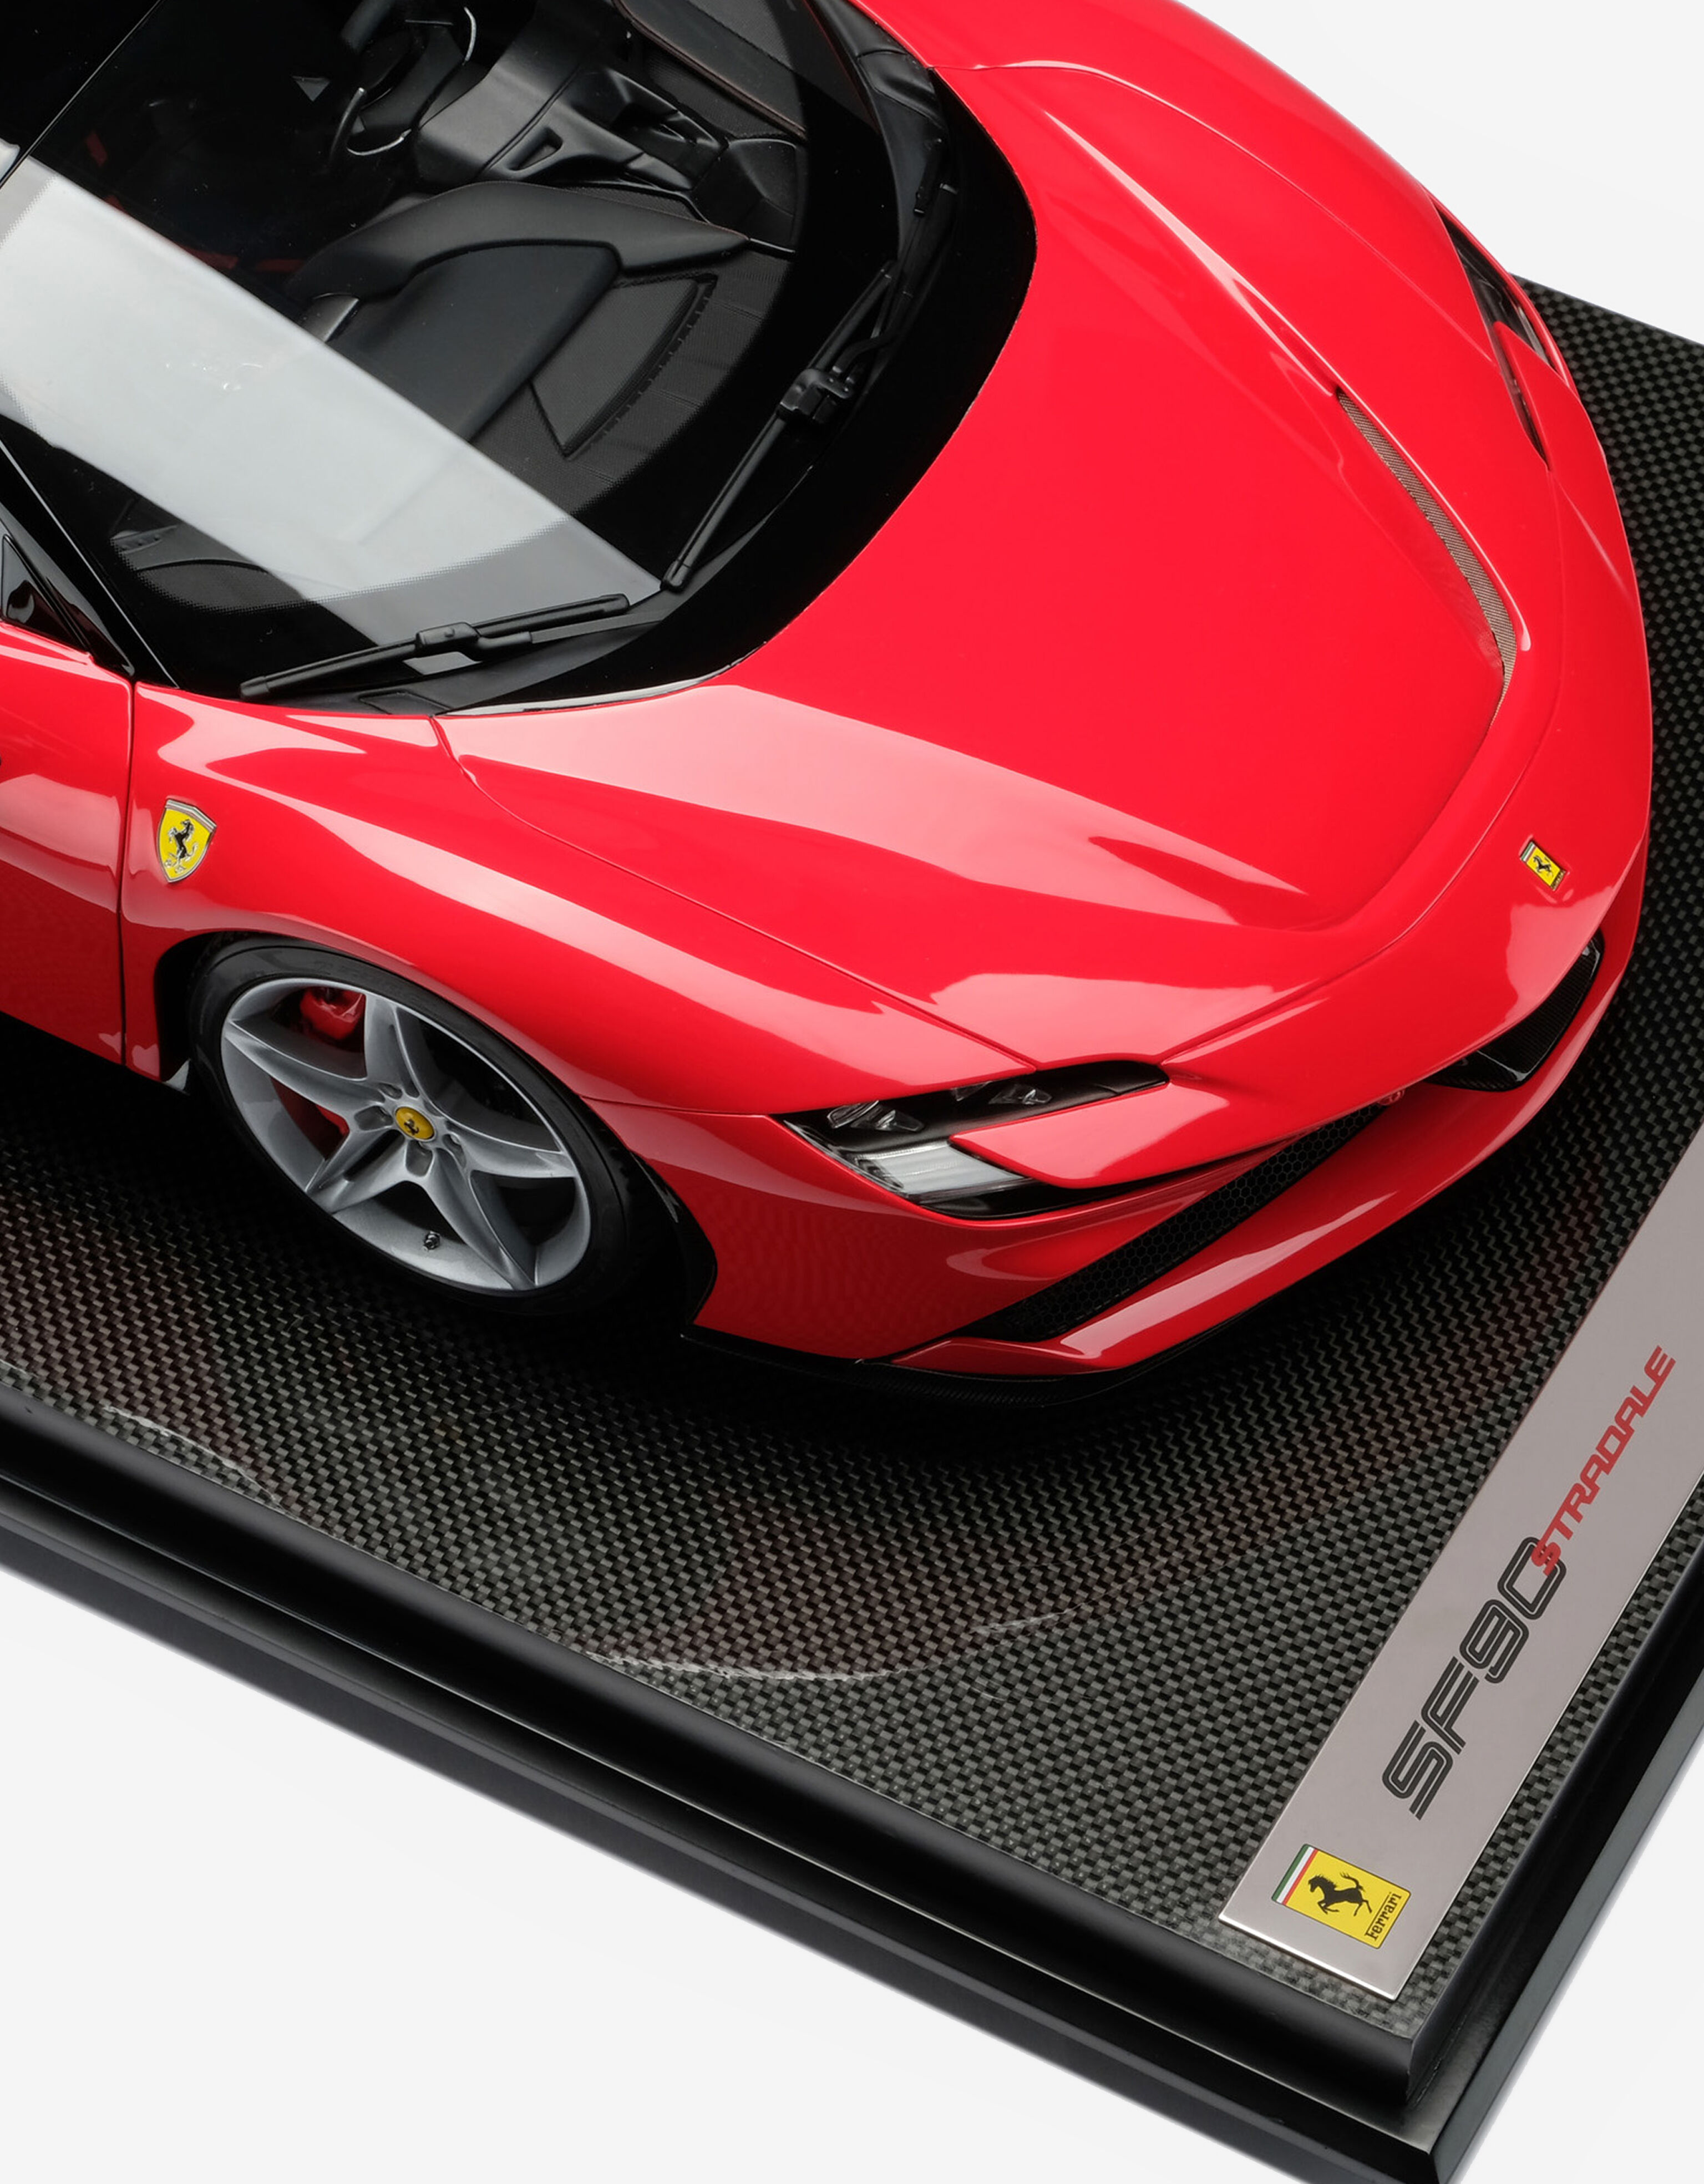 Ferrari Modèle SF90 Stradale à l’échelle 1/8 Rouge F0074f